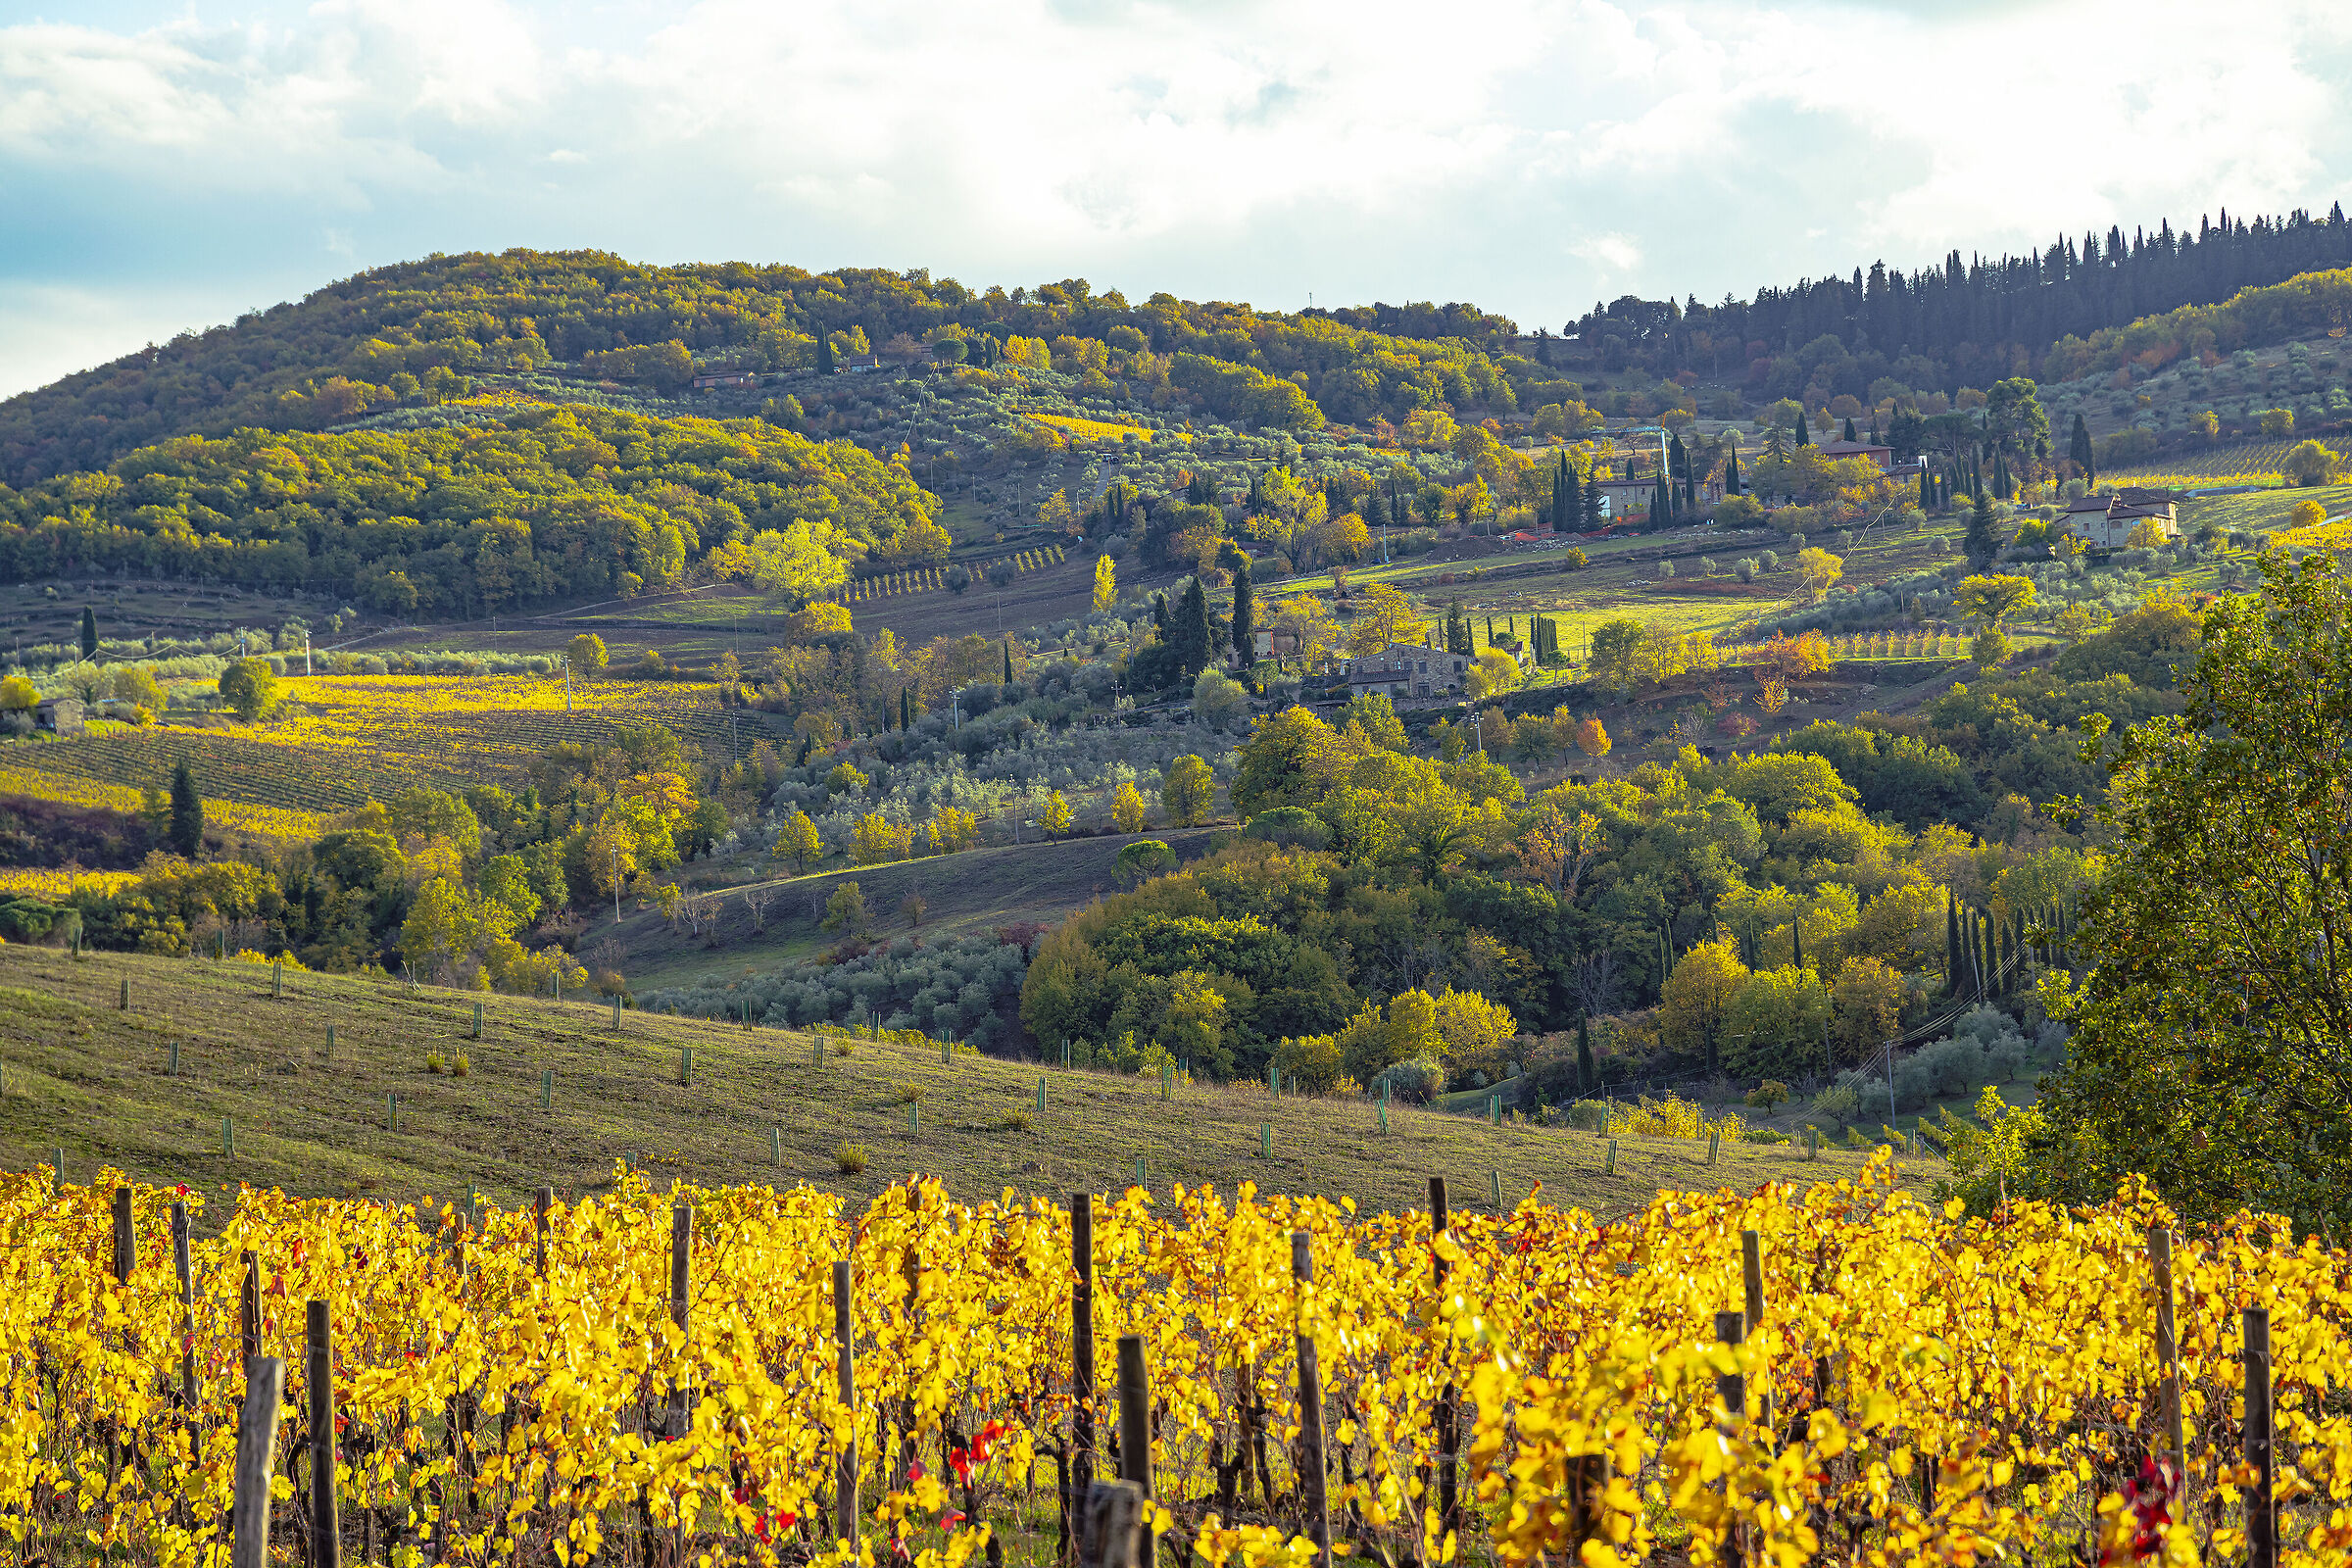 Vineyards in the hills in Lamole...